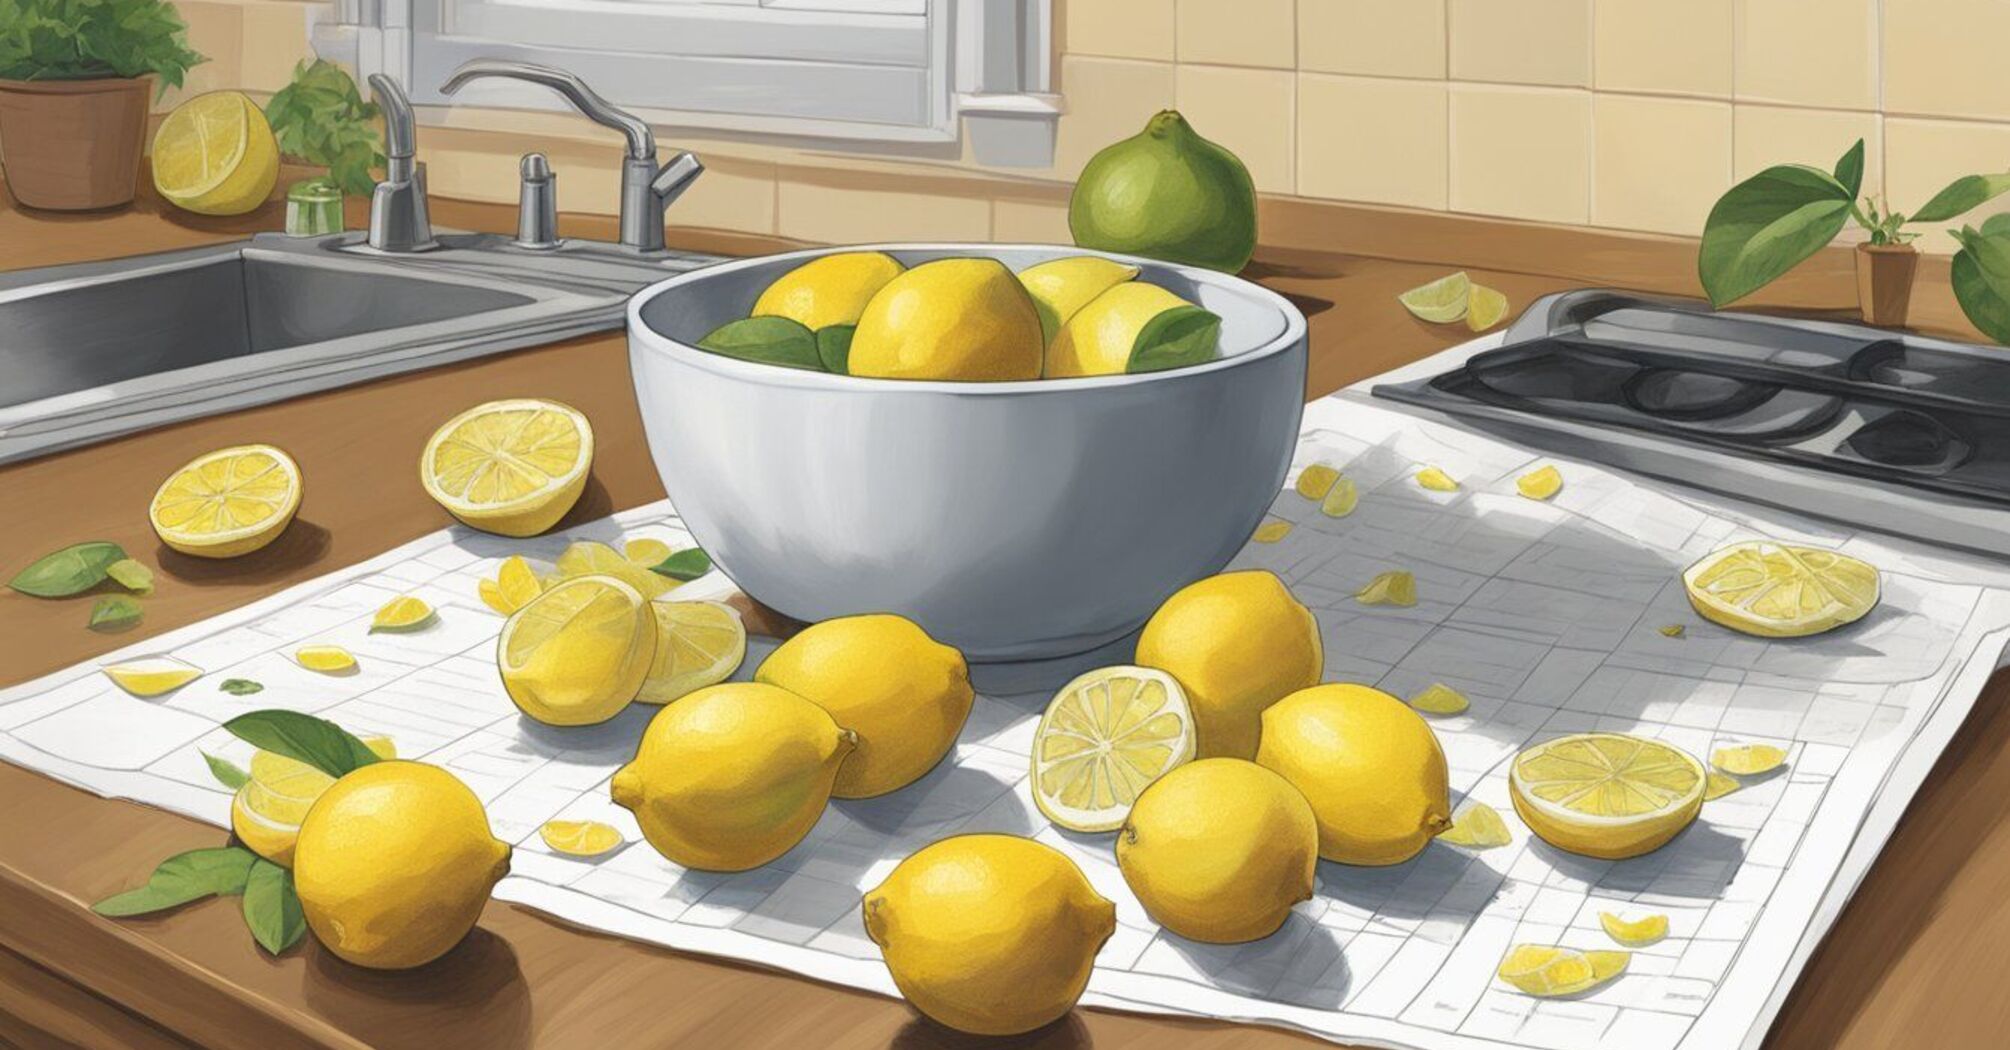 How to increase the shelf life of a cut lemon